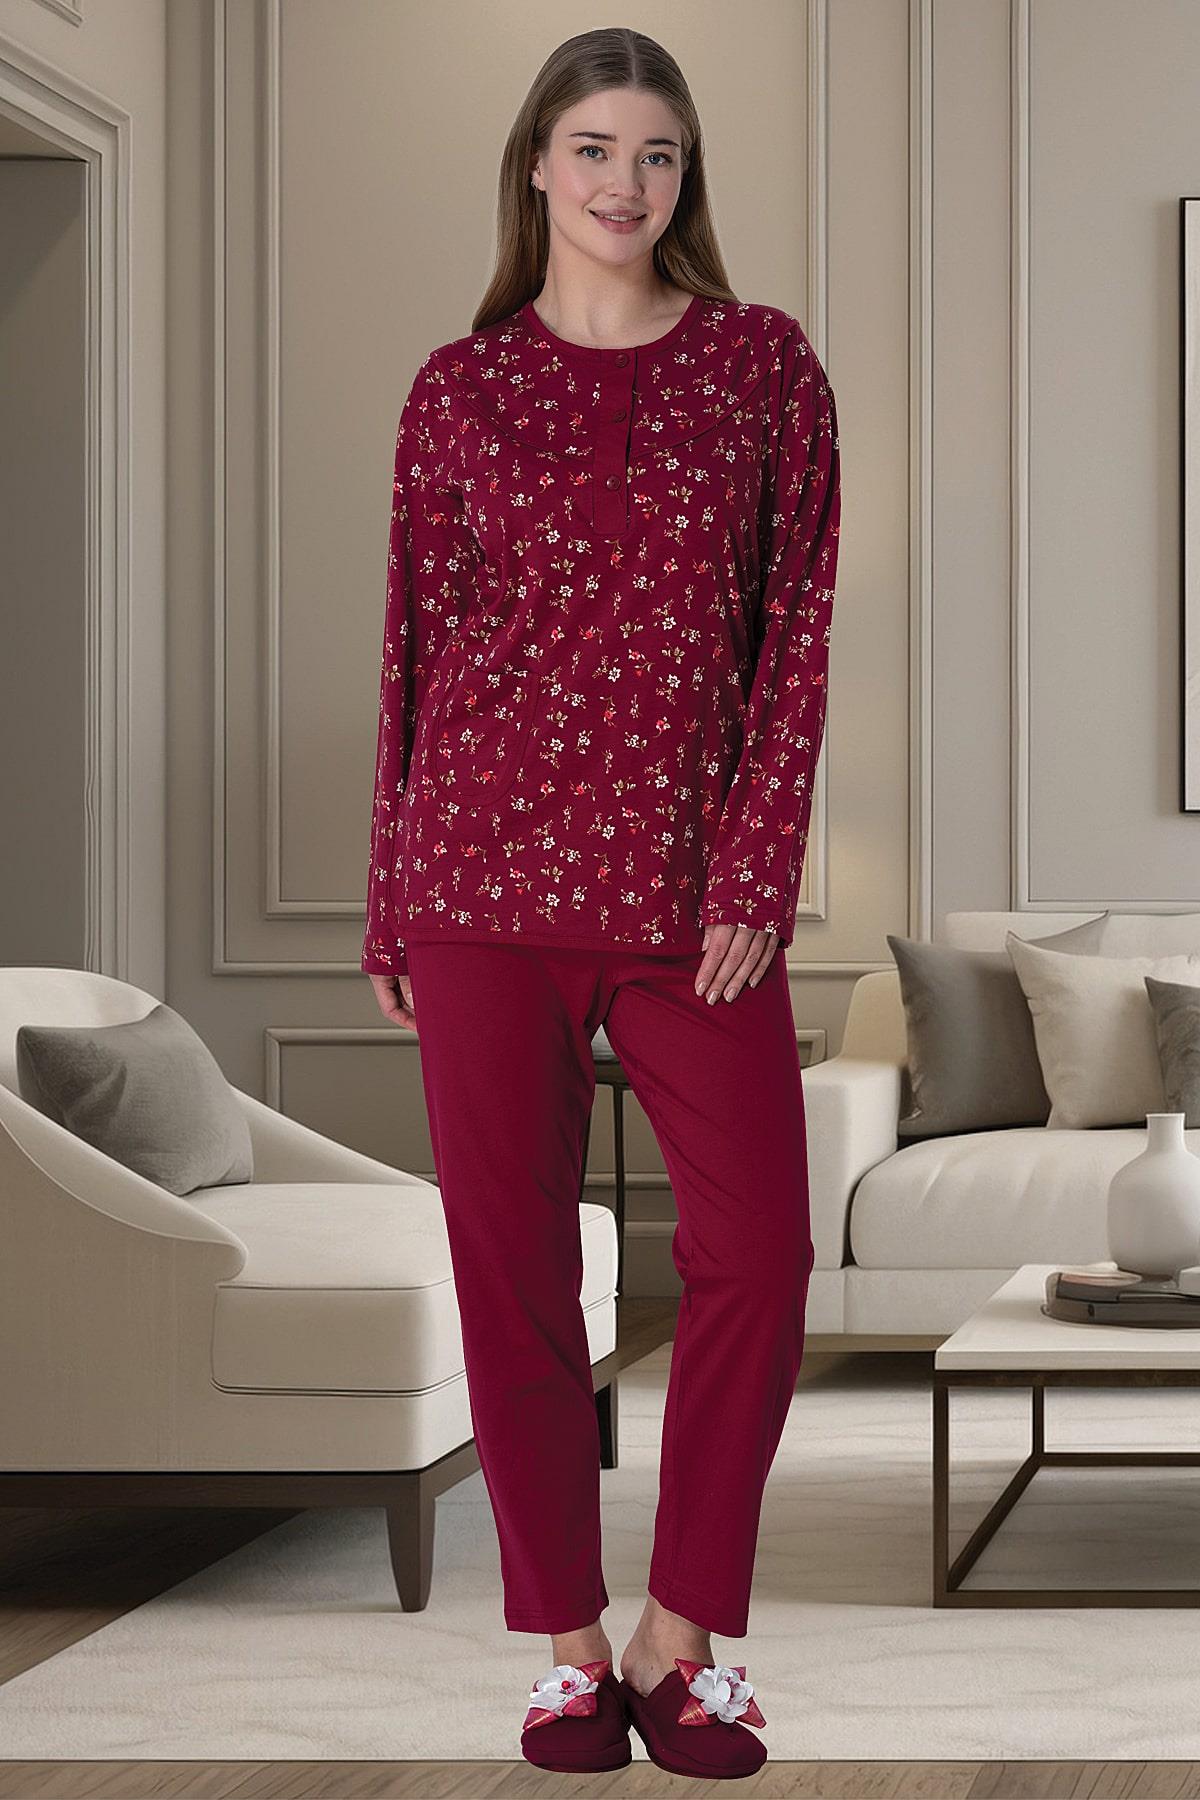 Shopymommy 6017 Flowery Plus Size Maternity & Nursing Pajamas Claret Red